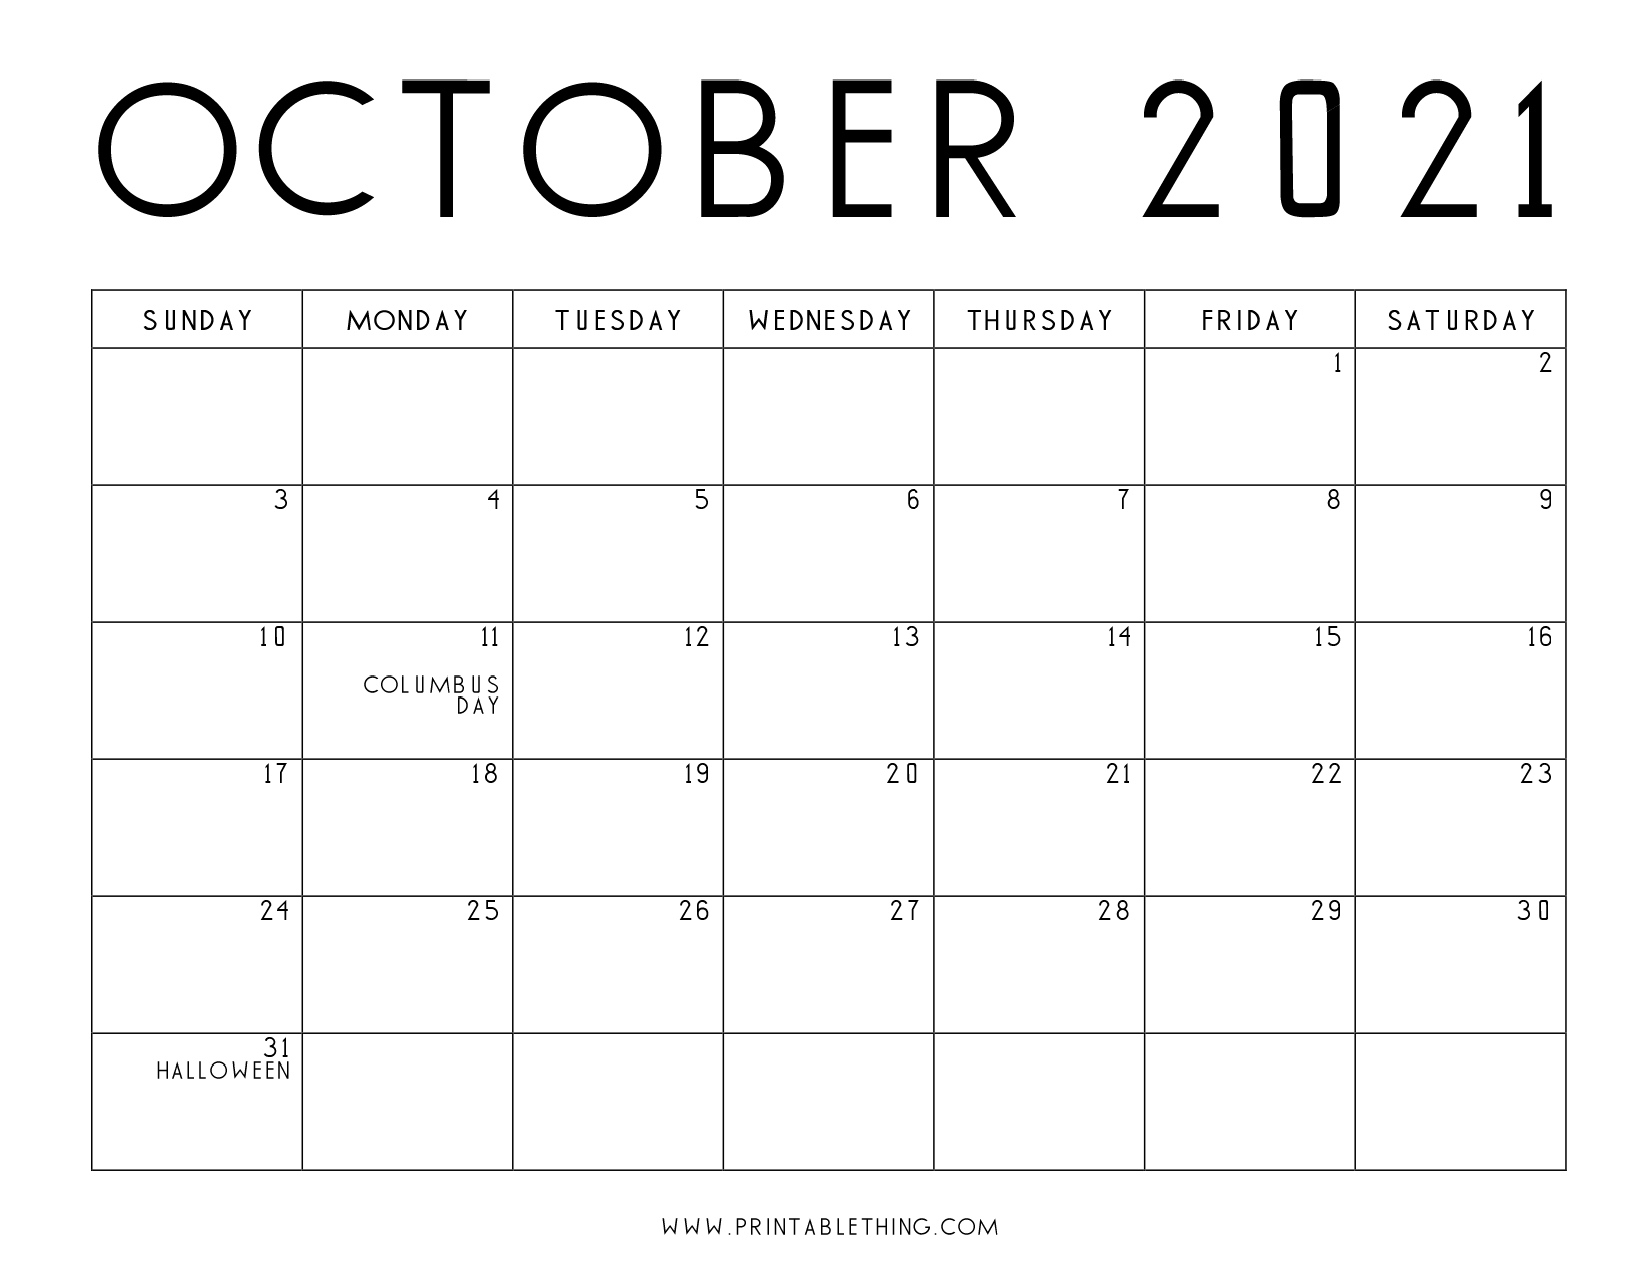 October 2021 Calendar Pdf, October 2021 Calendar Image Free October 2021 Lunar Calendar